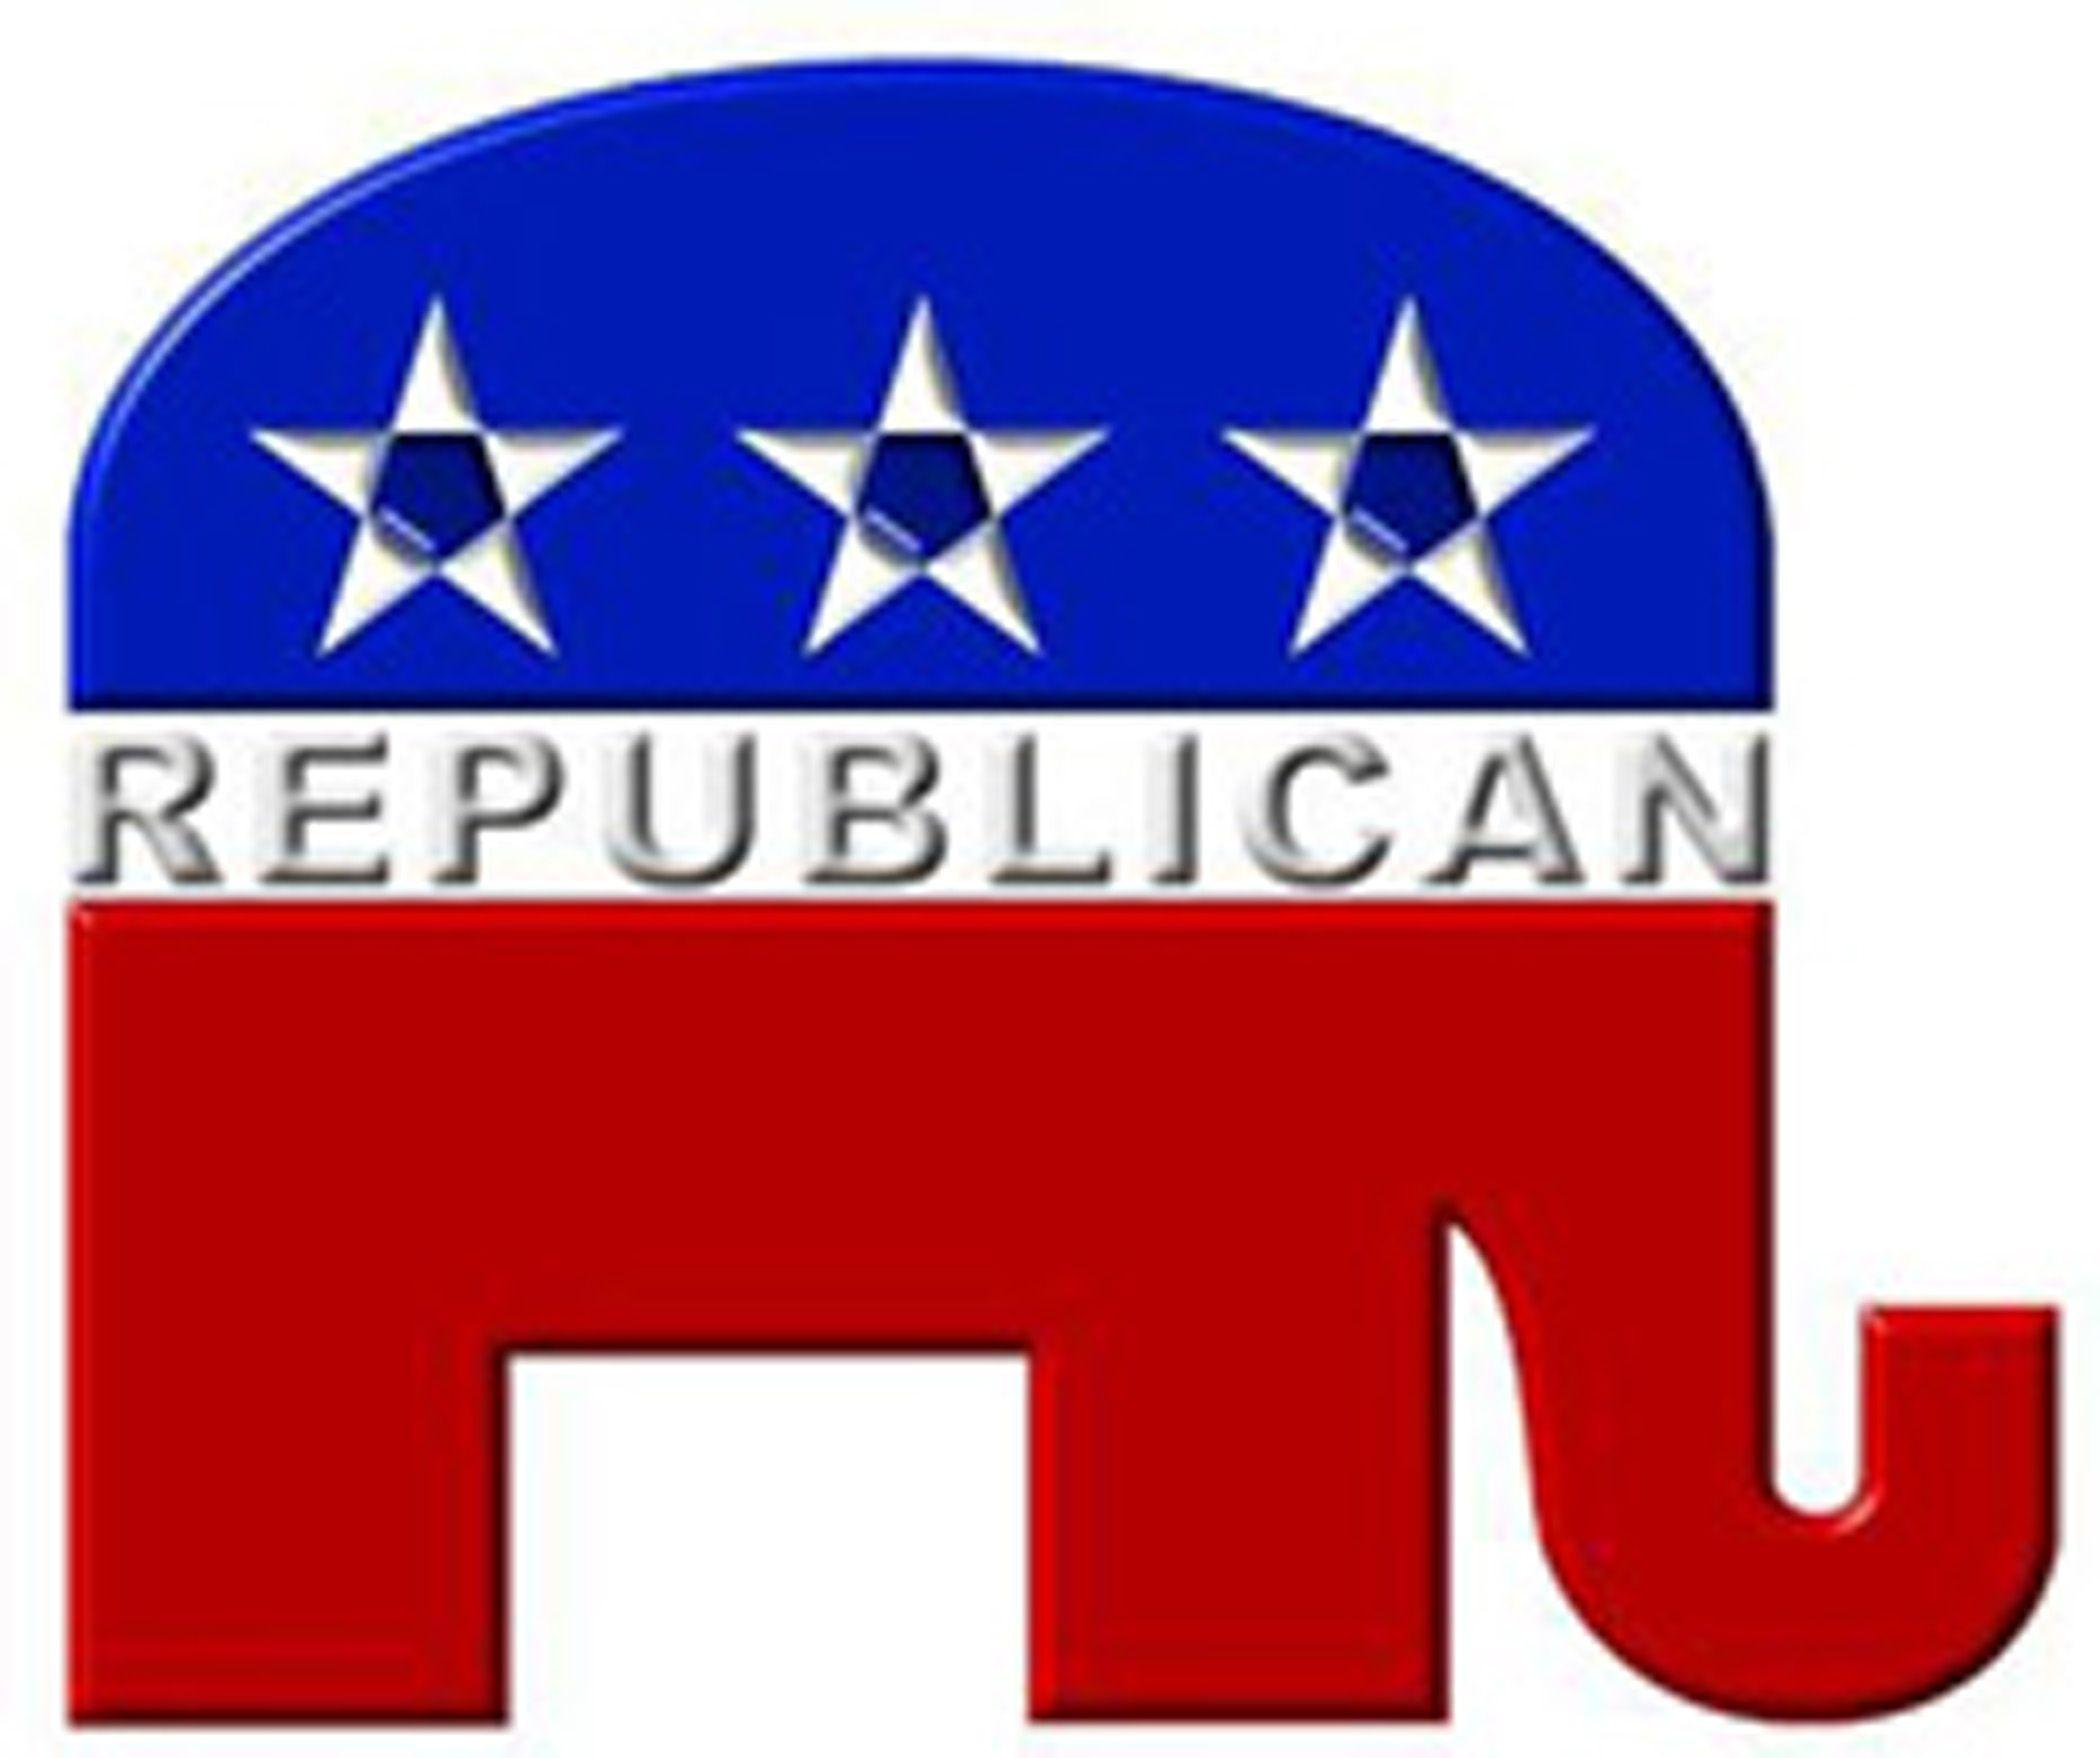 Republican Elephant Logo - Free Republican Elephant Picture, Download Free Clip Art, Free Clip